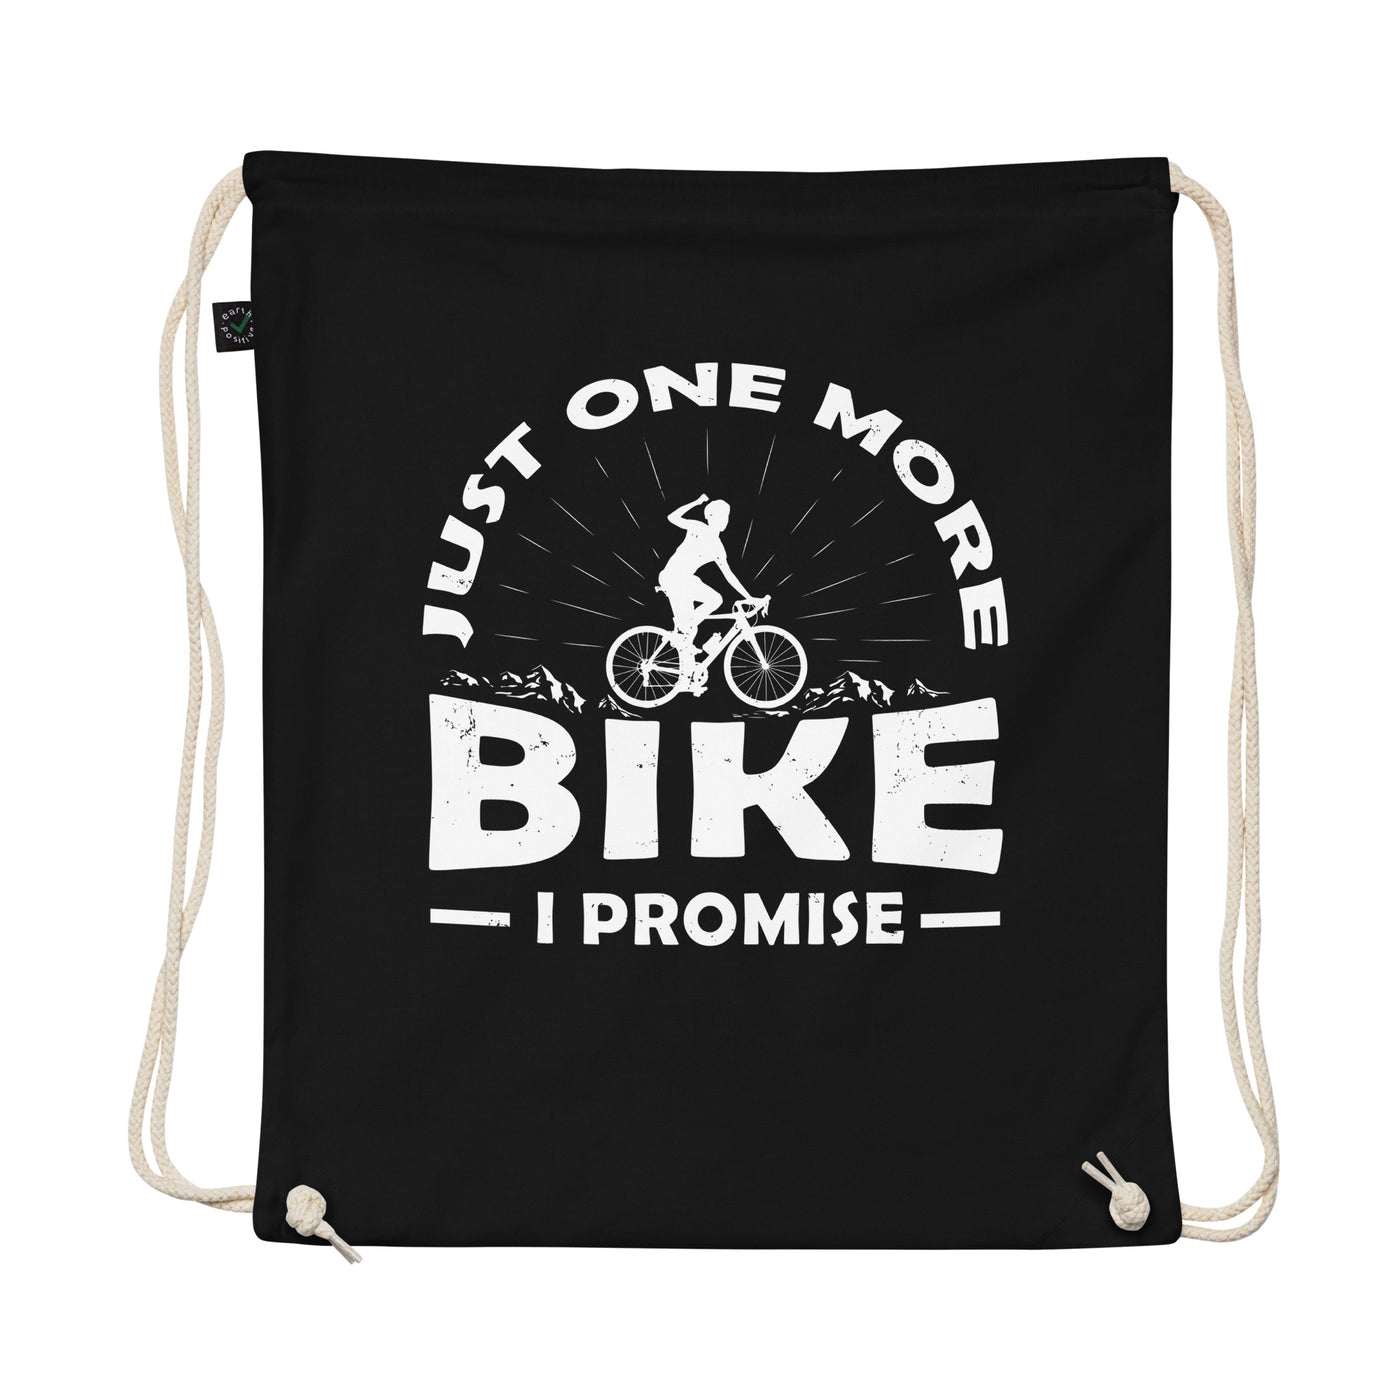 Just One More Bike, I Promise - Organic Turnbeutel fahrrad Schwarz